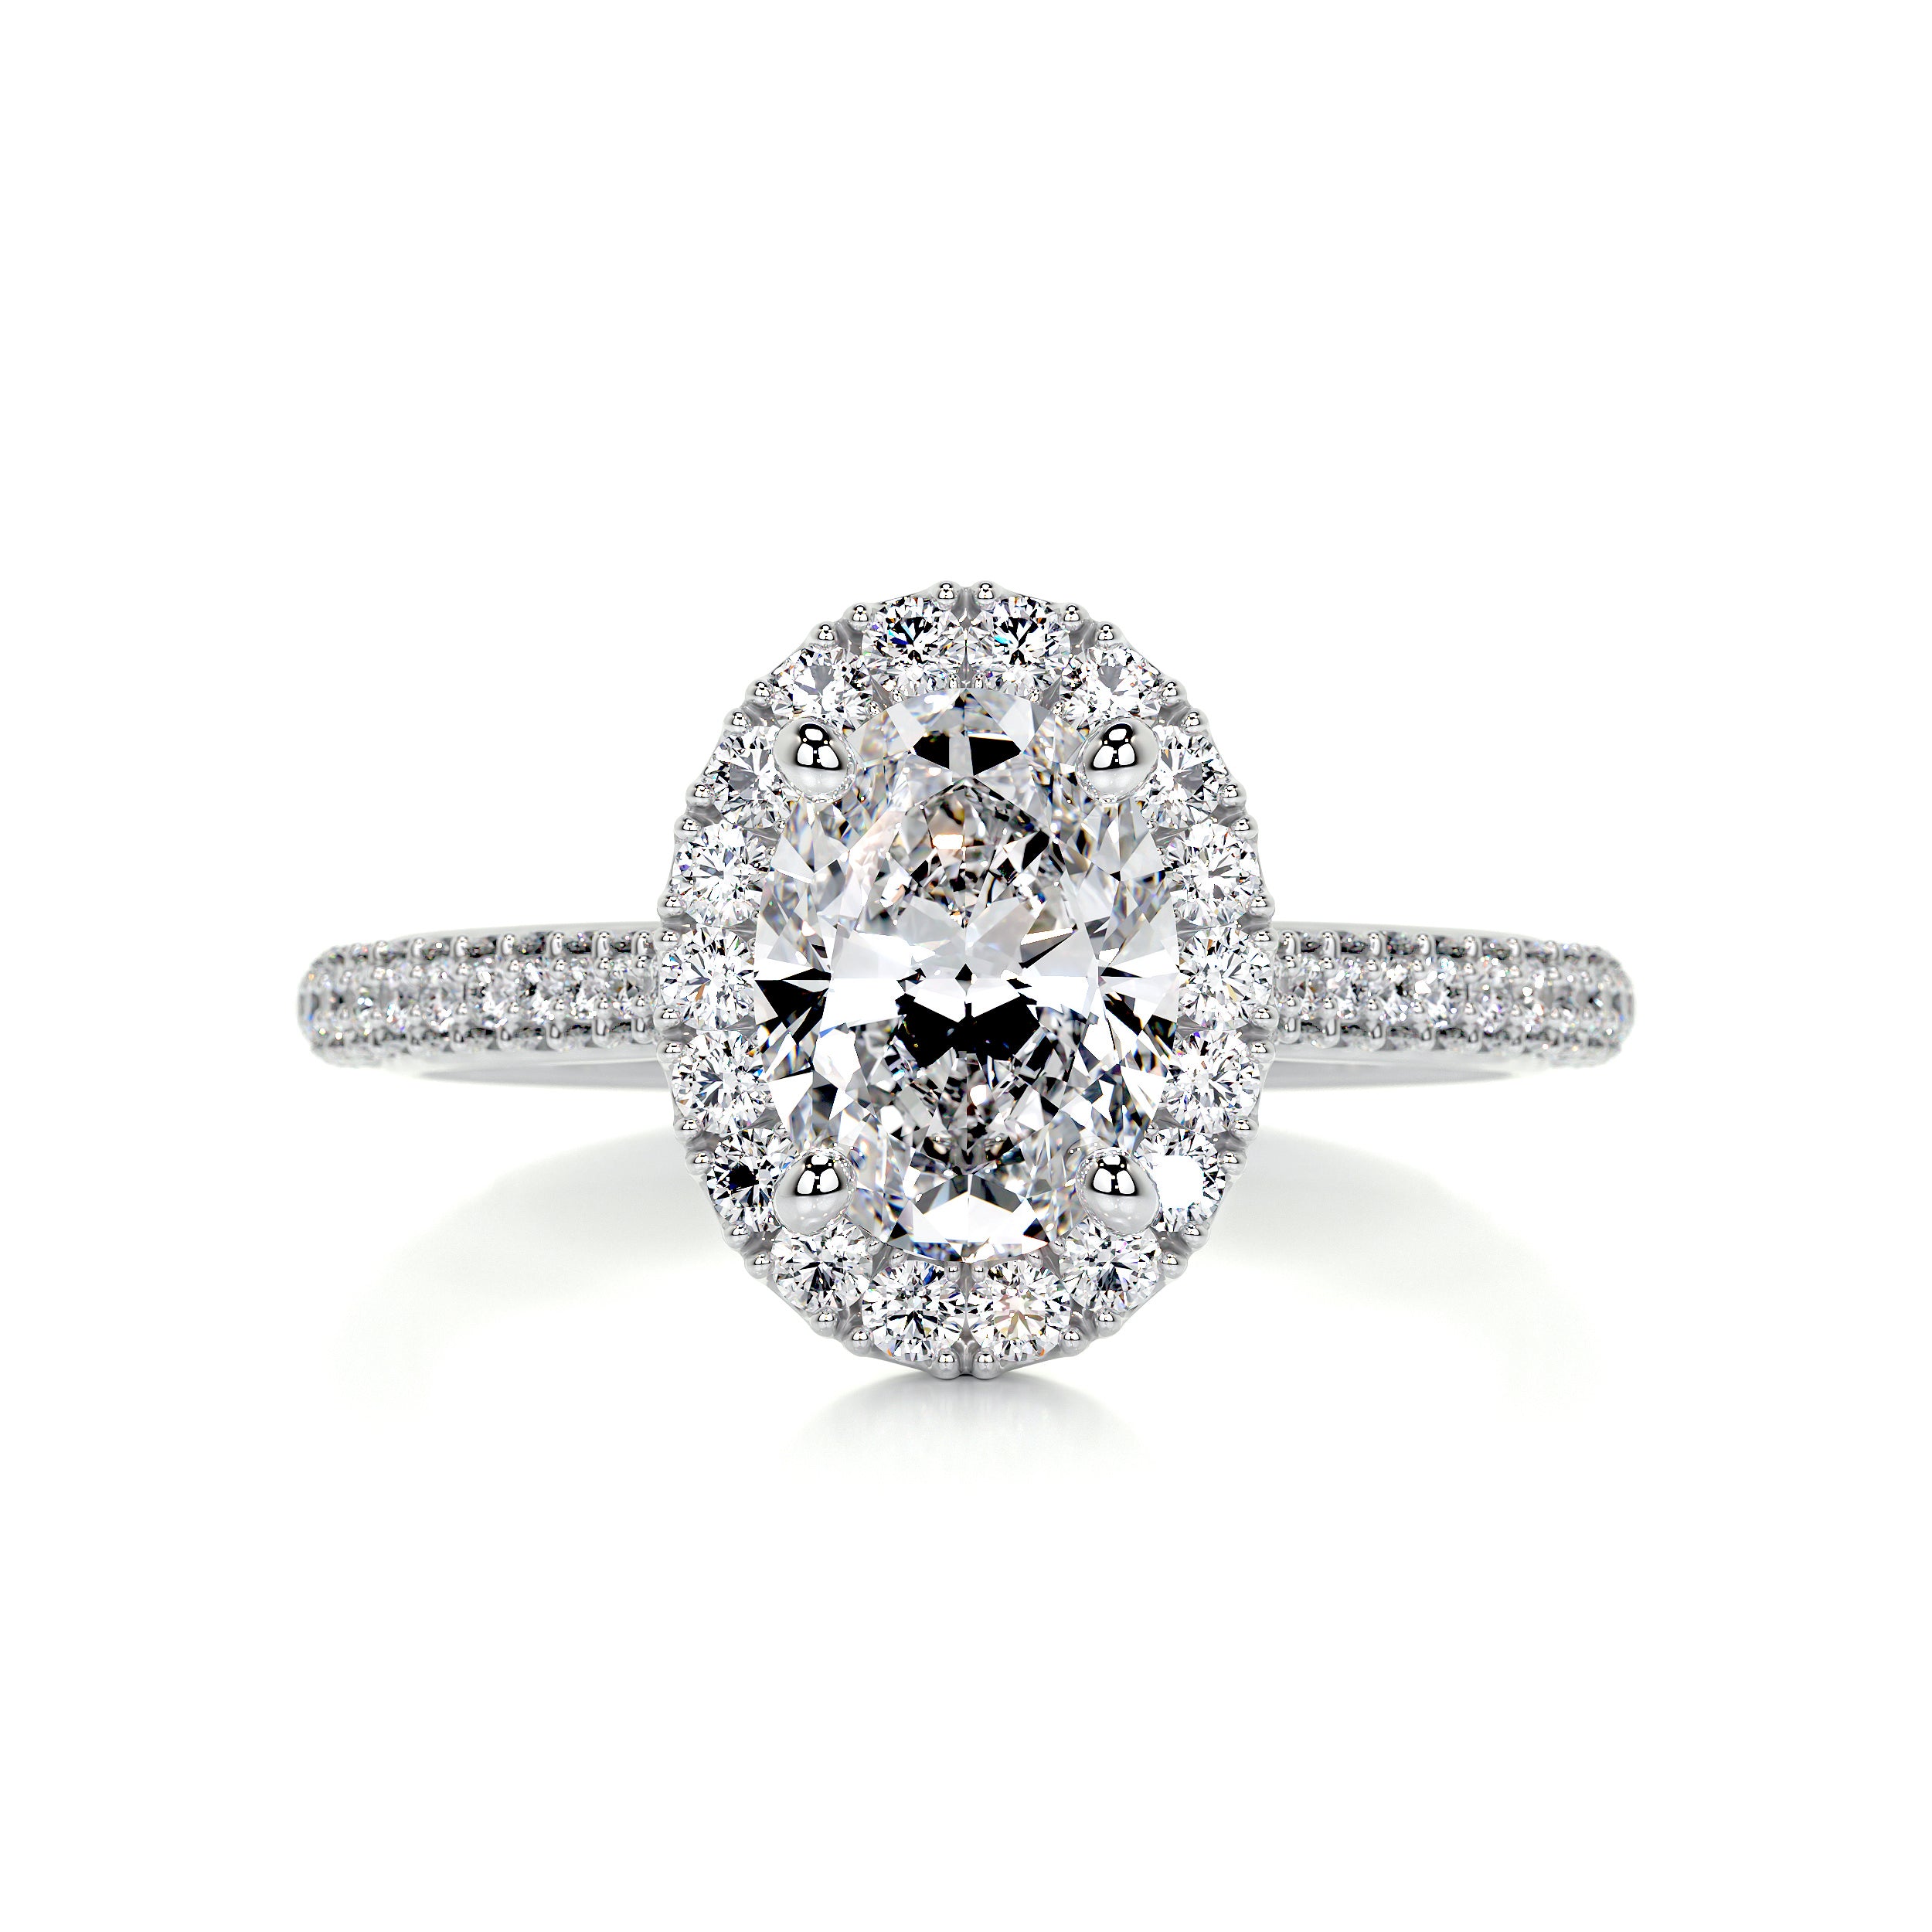 Kinley Diamond Engagement Ring   (2.25 Carat) -18K White Gold